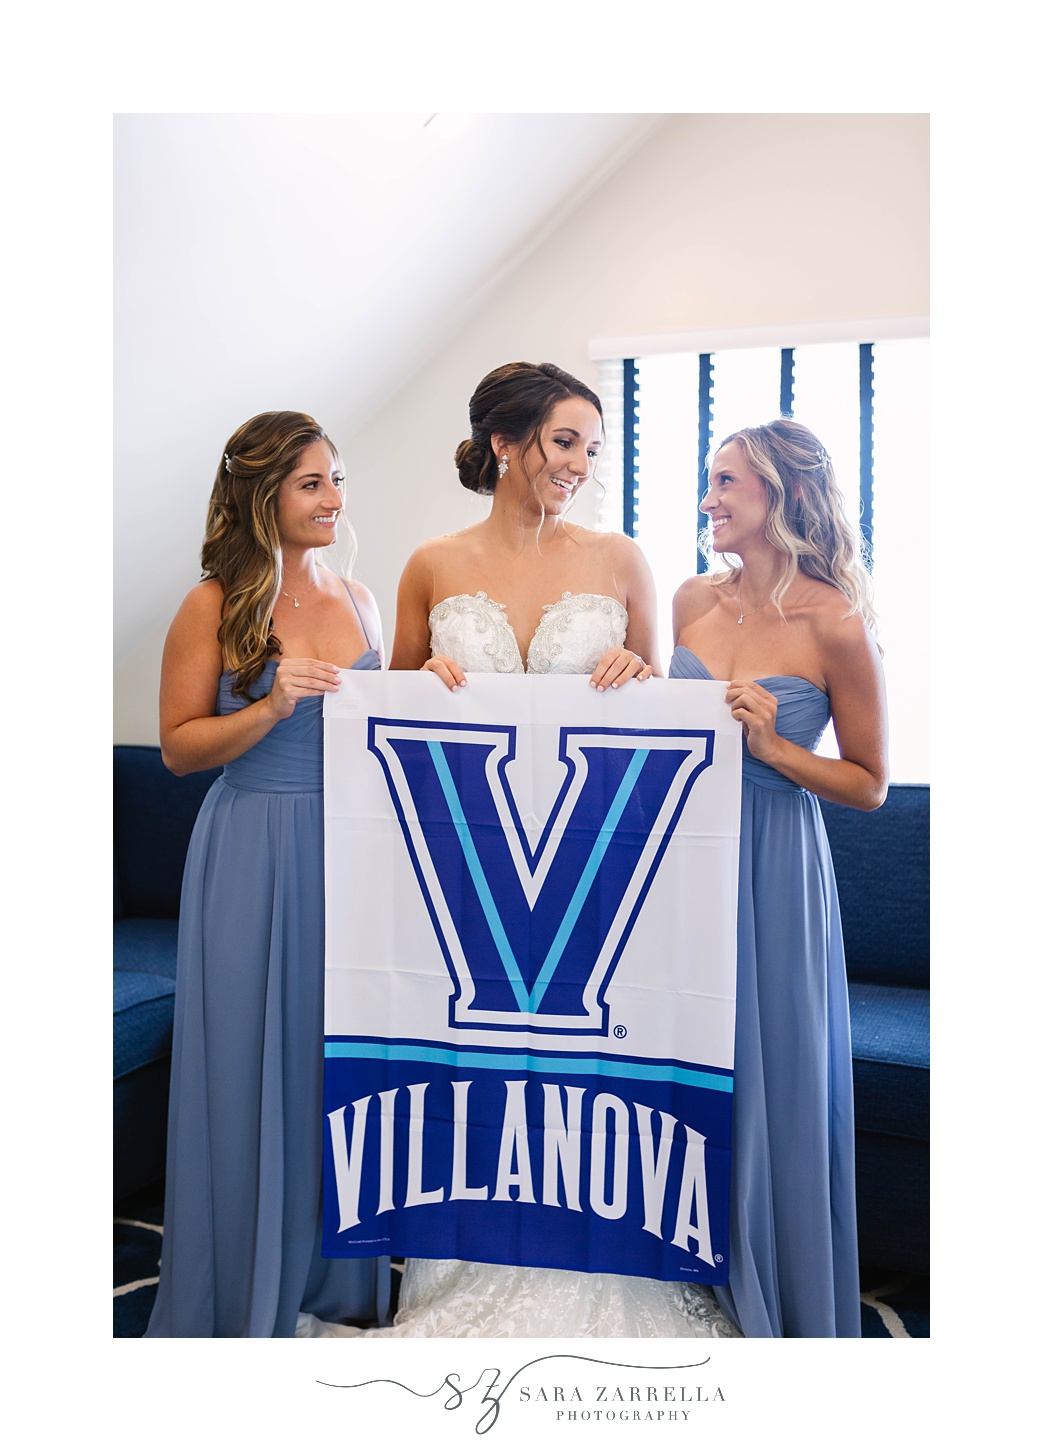 bride and bridesmaids hold Villanva flag during wedding day prep